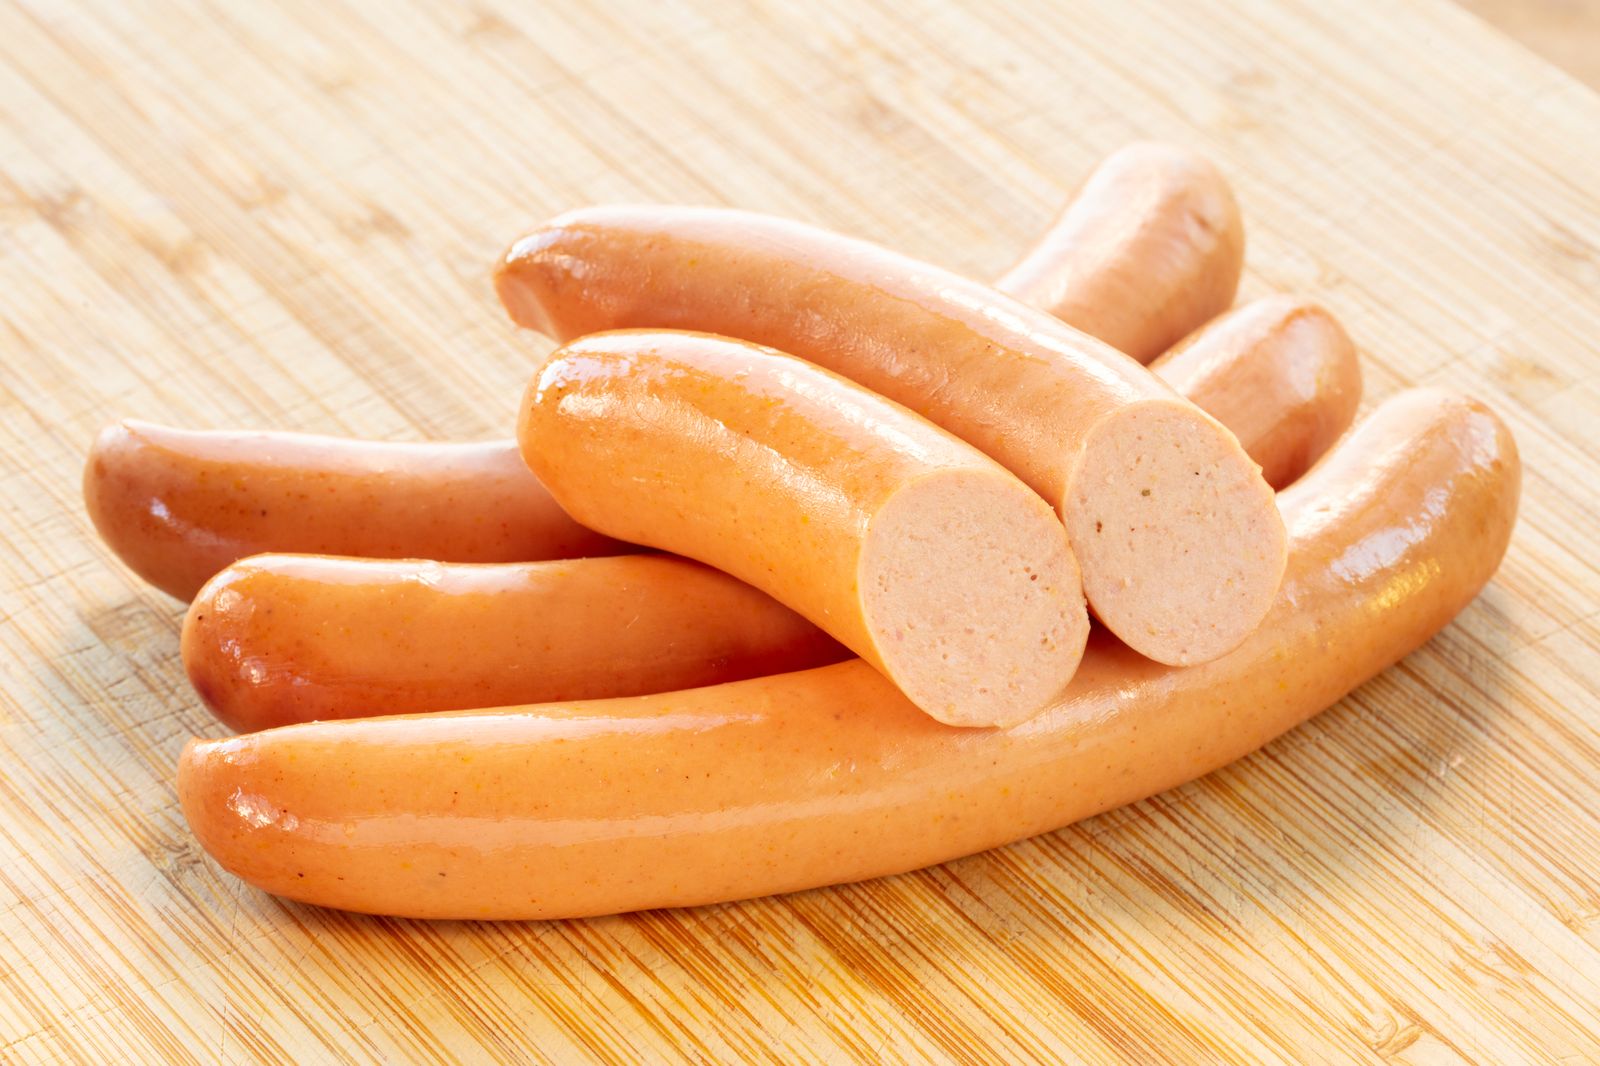 https://www.josefsartisanmeats.com/wp-content/uploads/2020/07/Wiener-sausage.jpeg